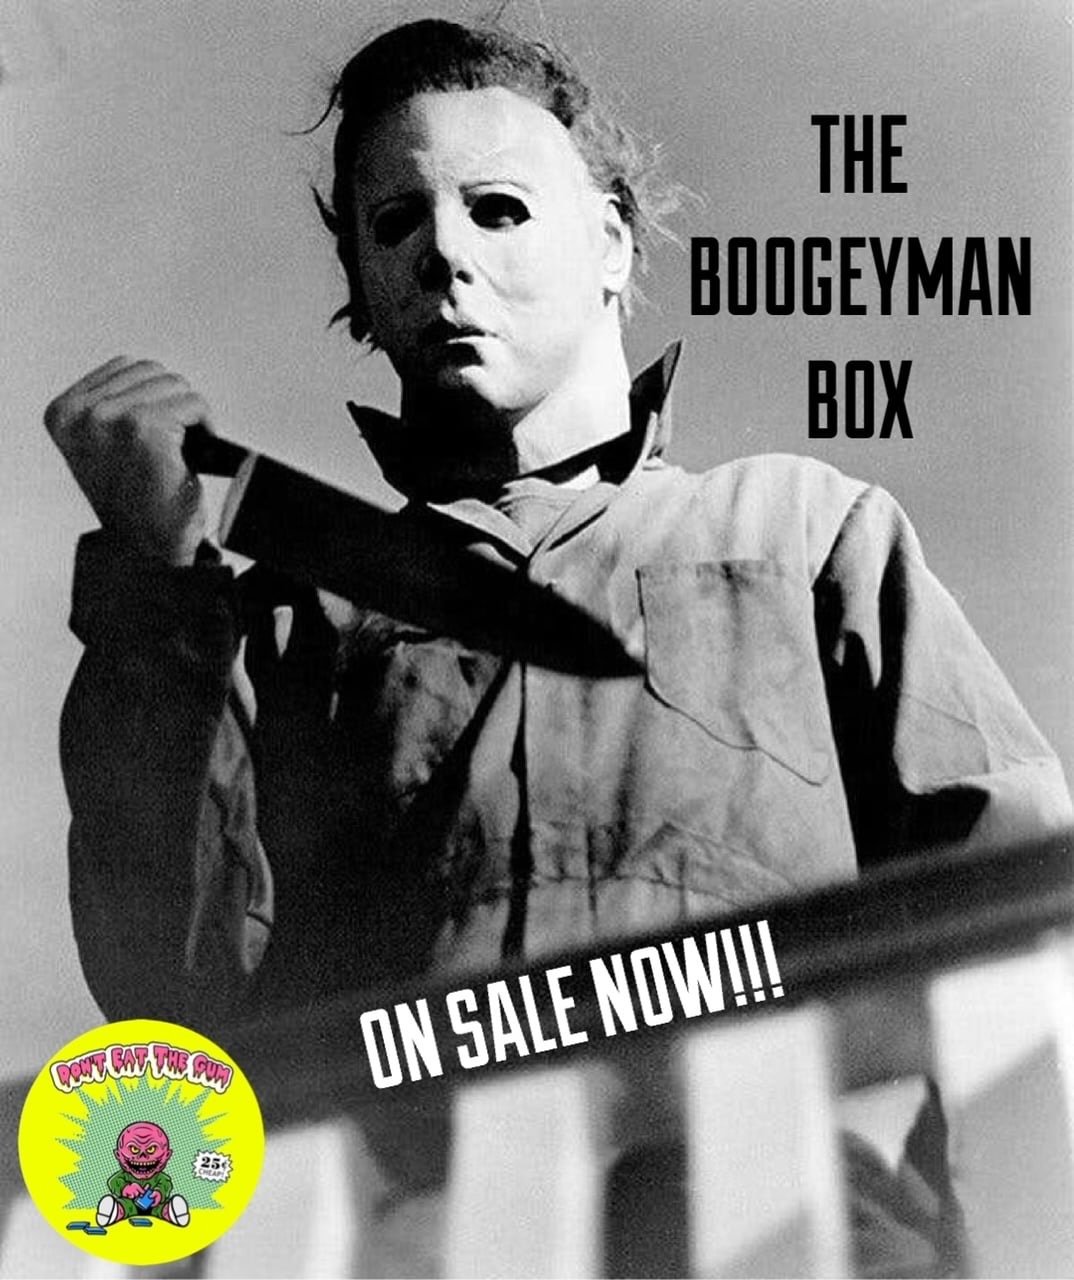 Image of The Boogeyman Box